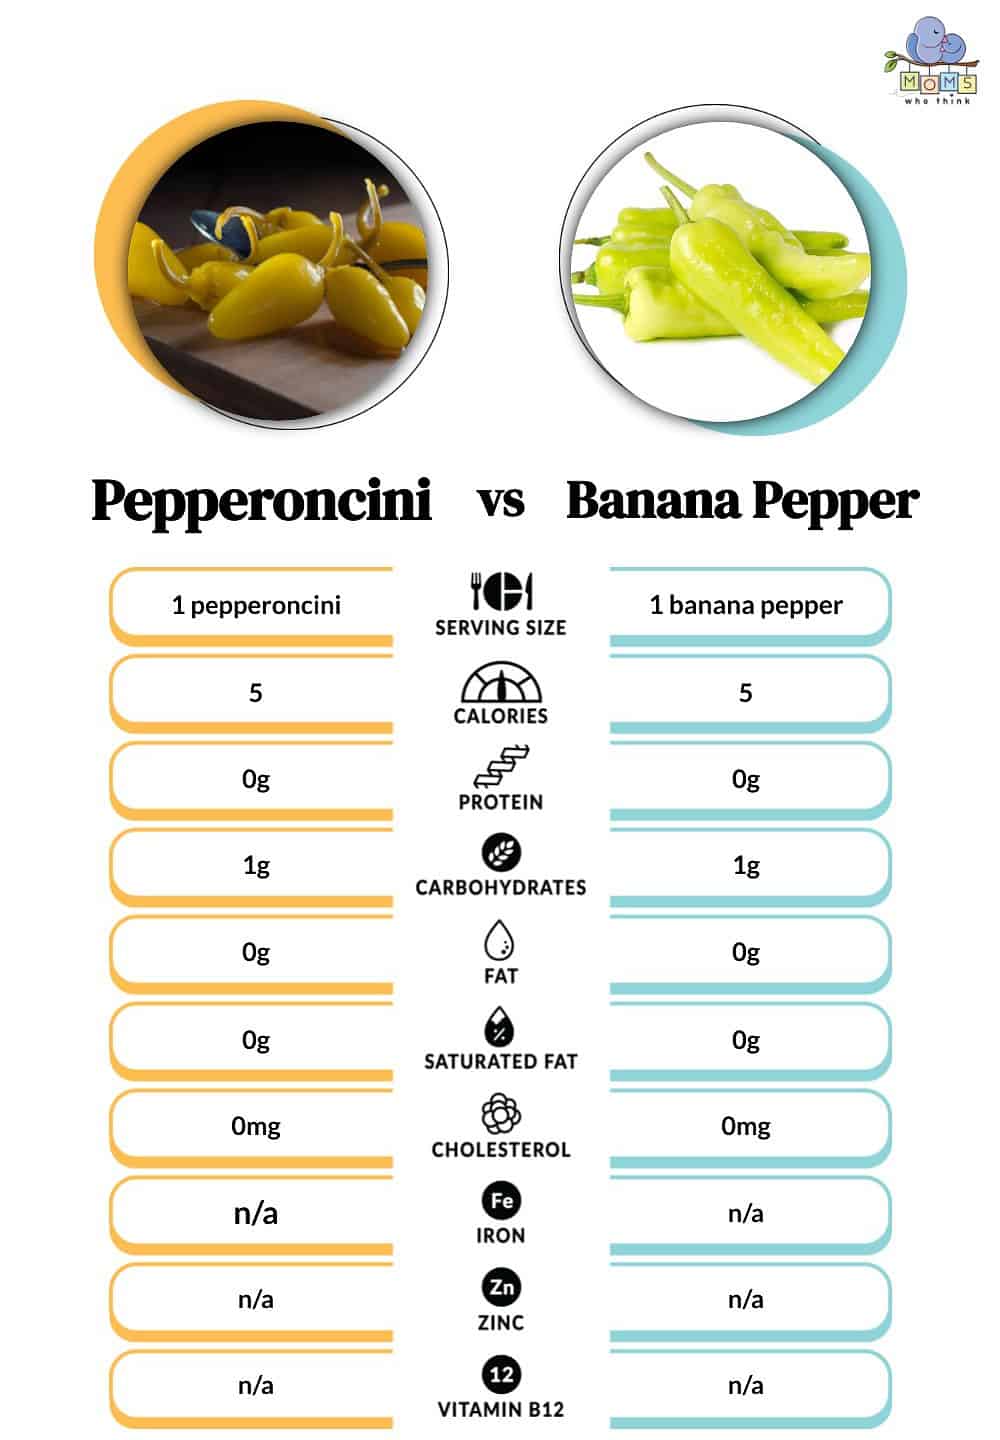 Pepperoncini vs Banana Pepper Nutritional Facts